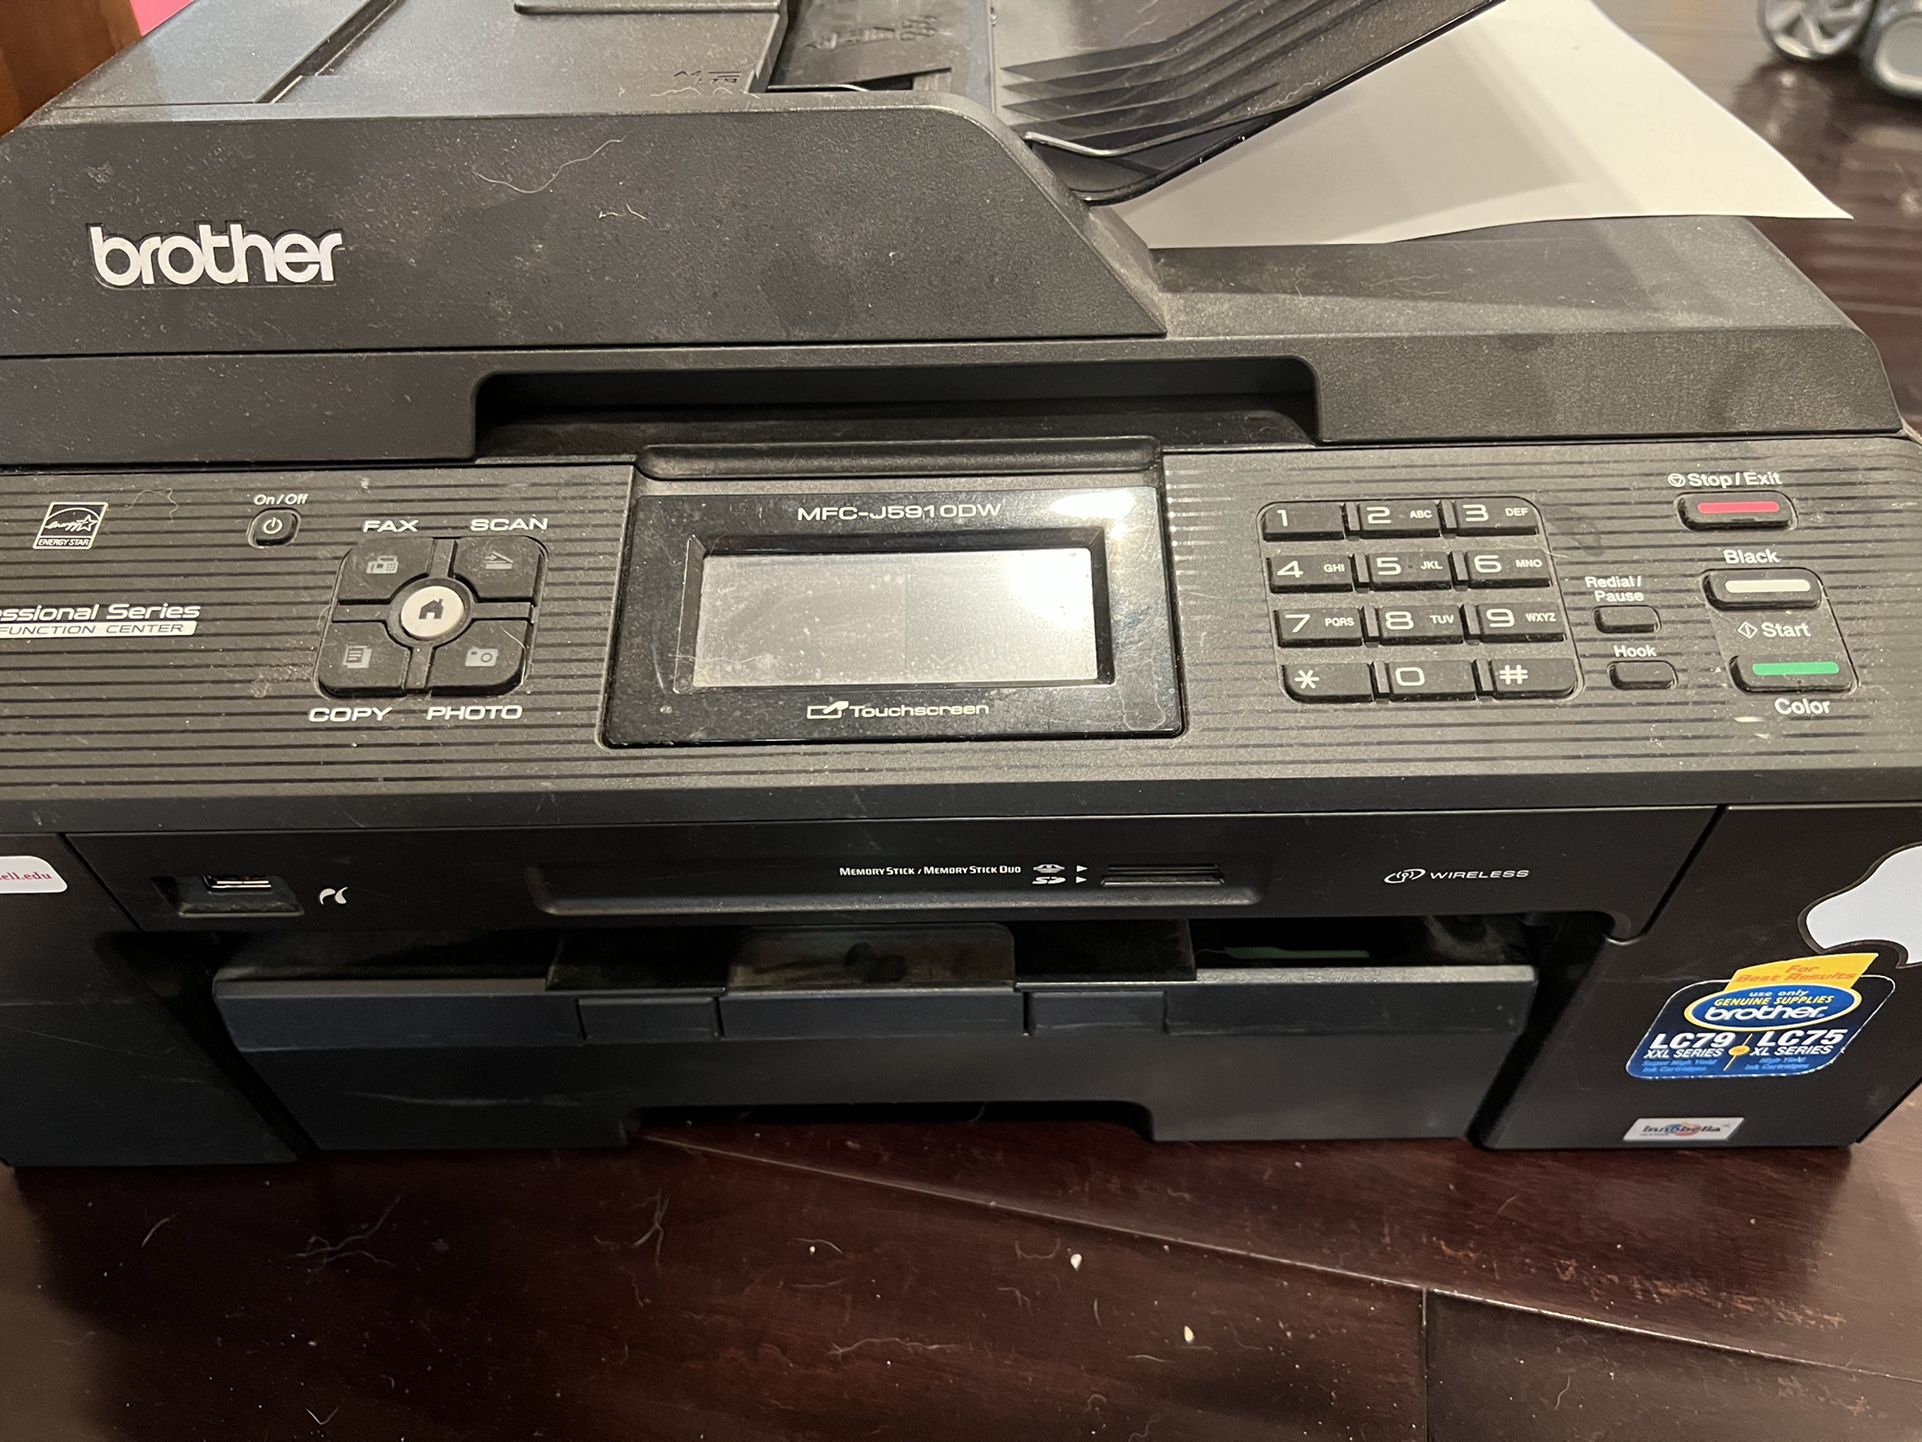 Printer: Brother Model#MFC-J5910DW